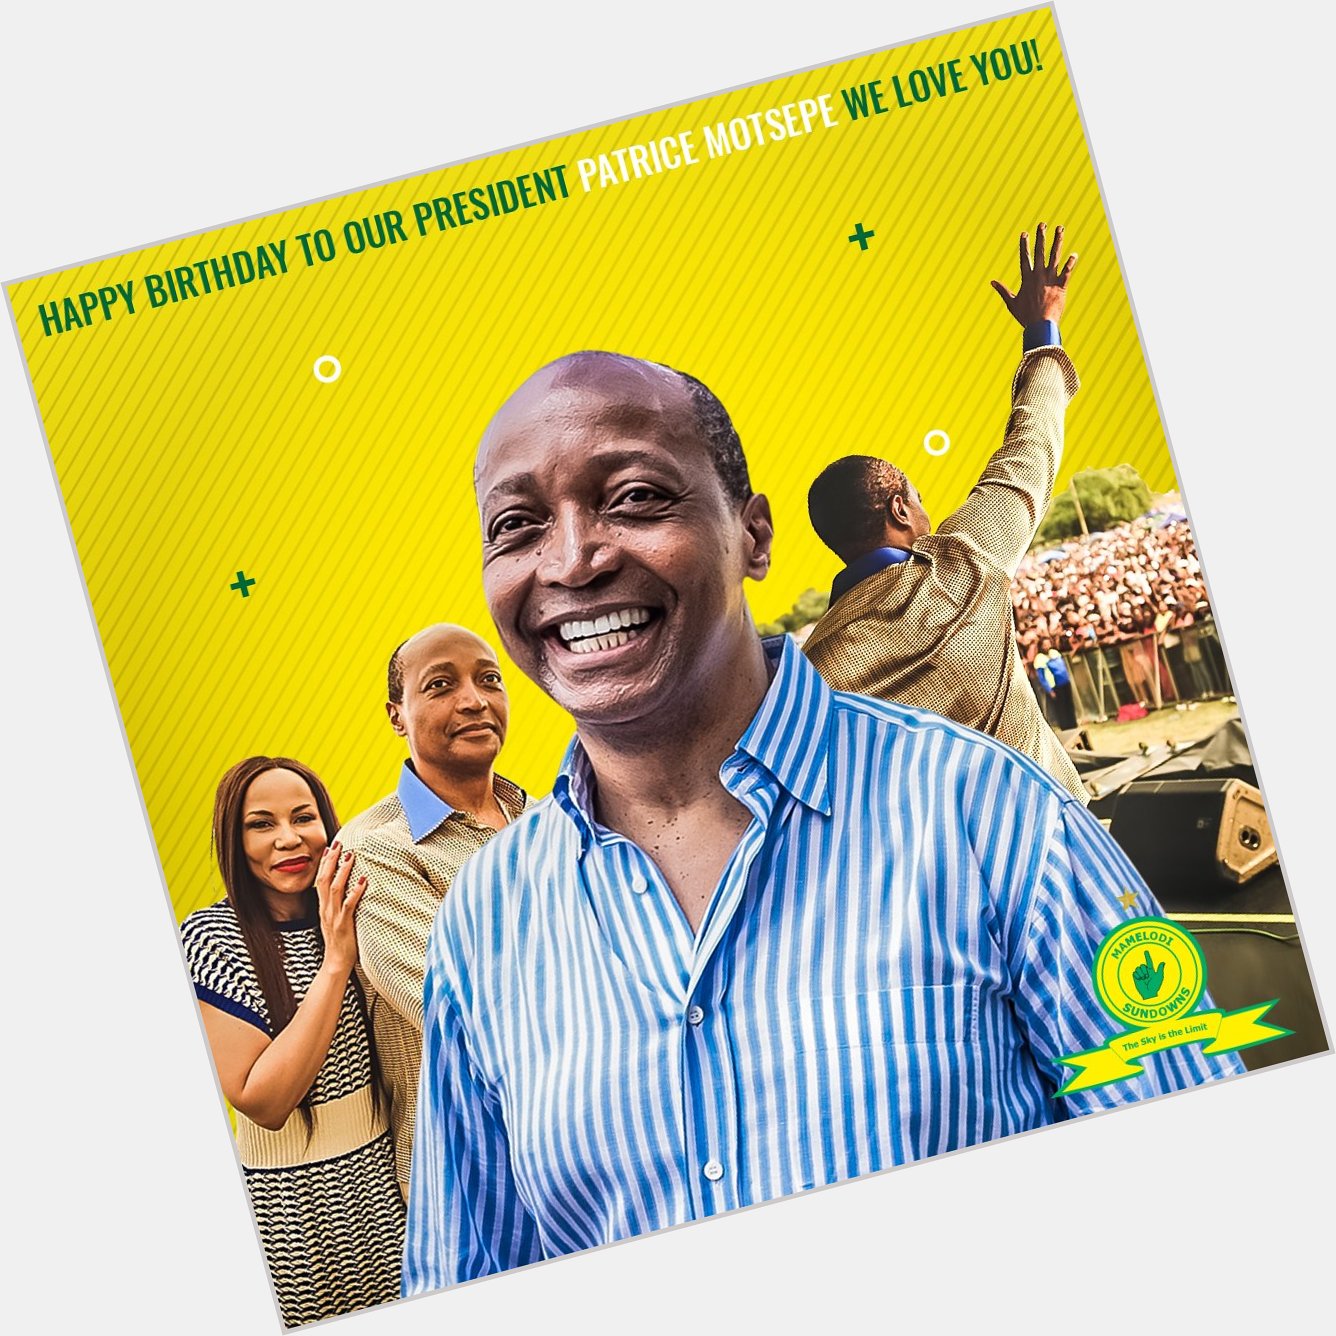 Masandawana lets wish our President Dr. Patrice Motsepe a happy birthday! 